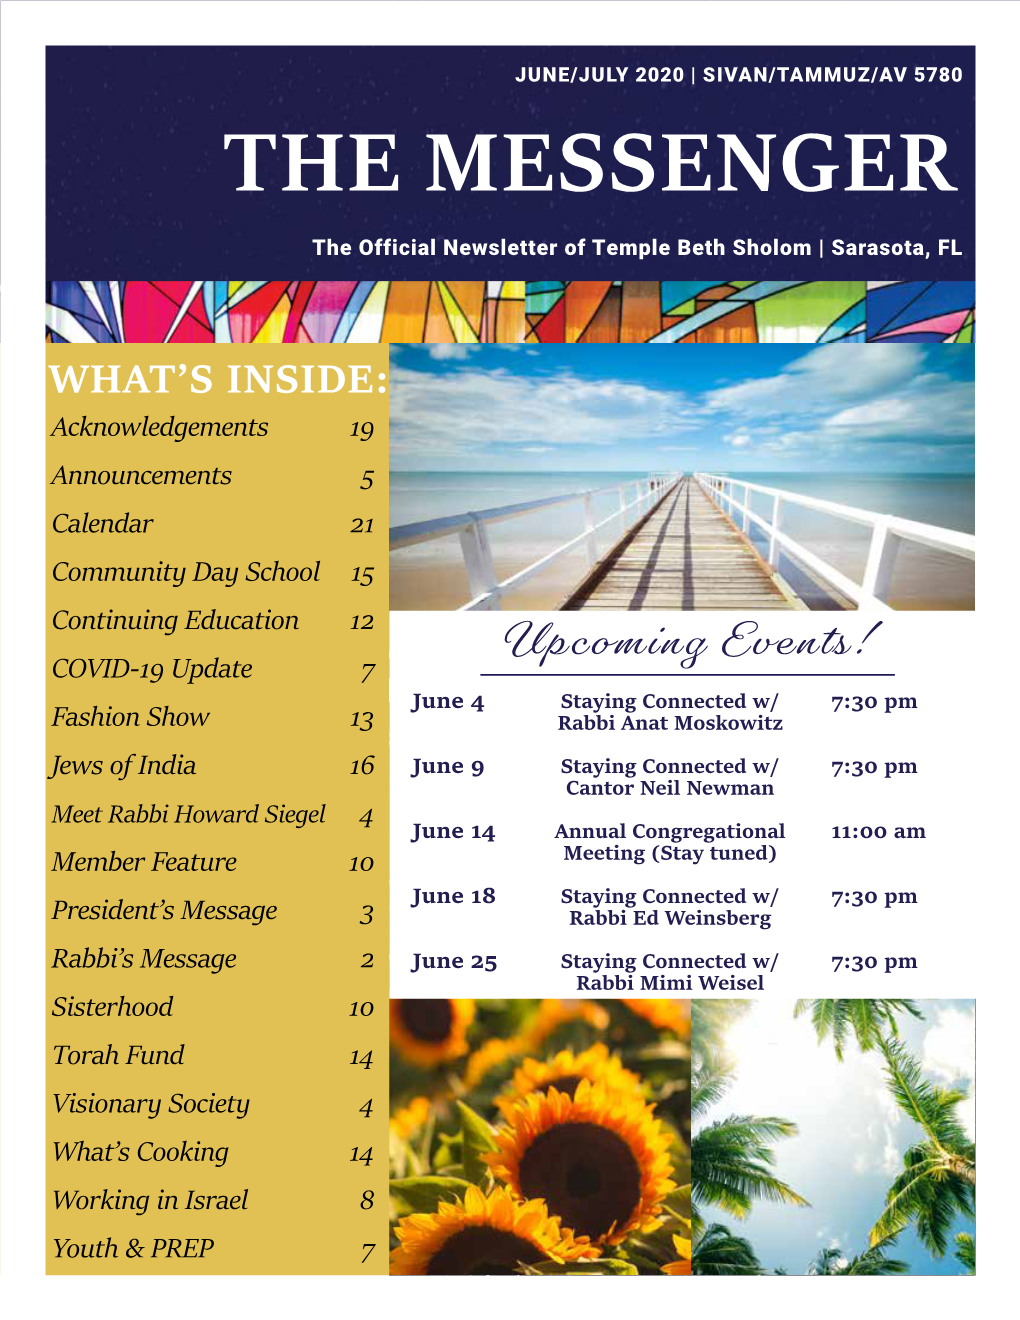 THE MESSENGER the Official Newsletter of Temple Beth Sholom | Sarasota, FL